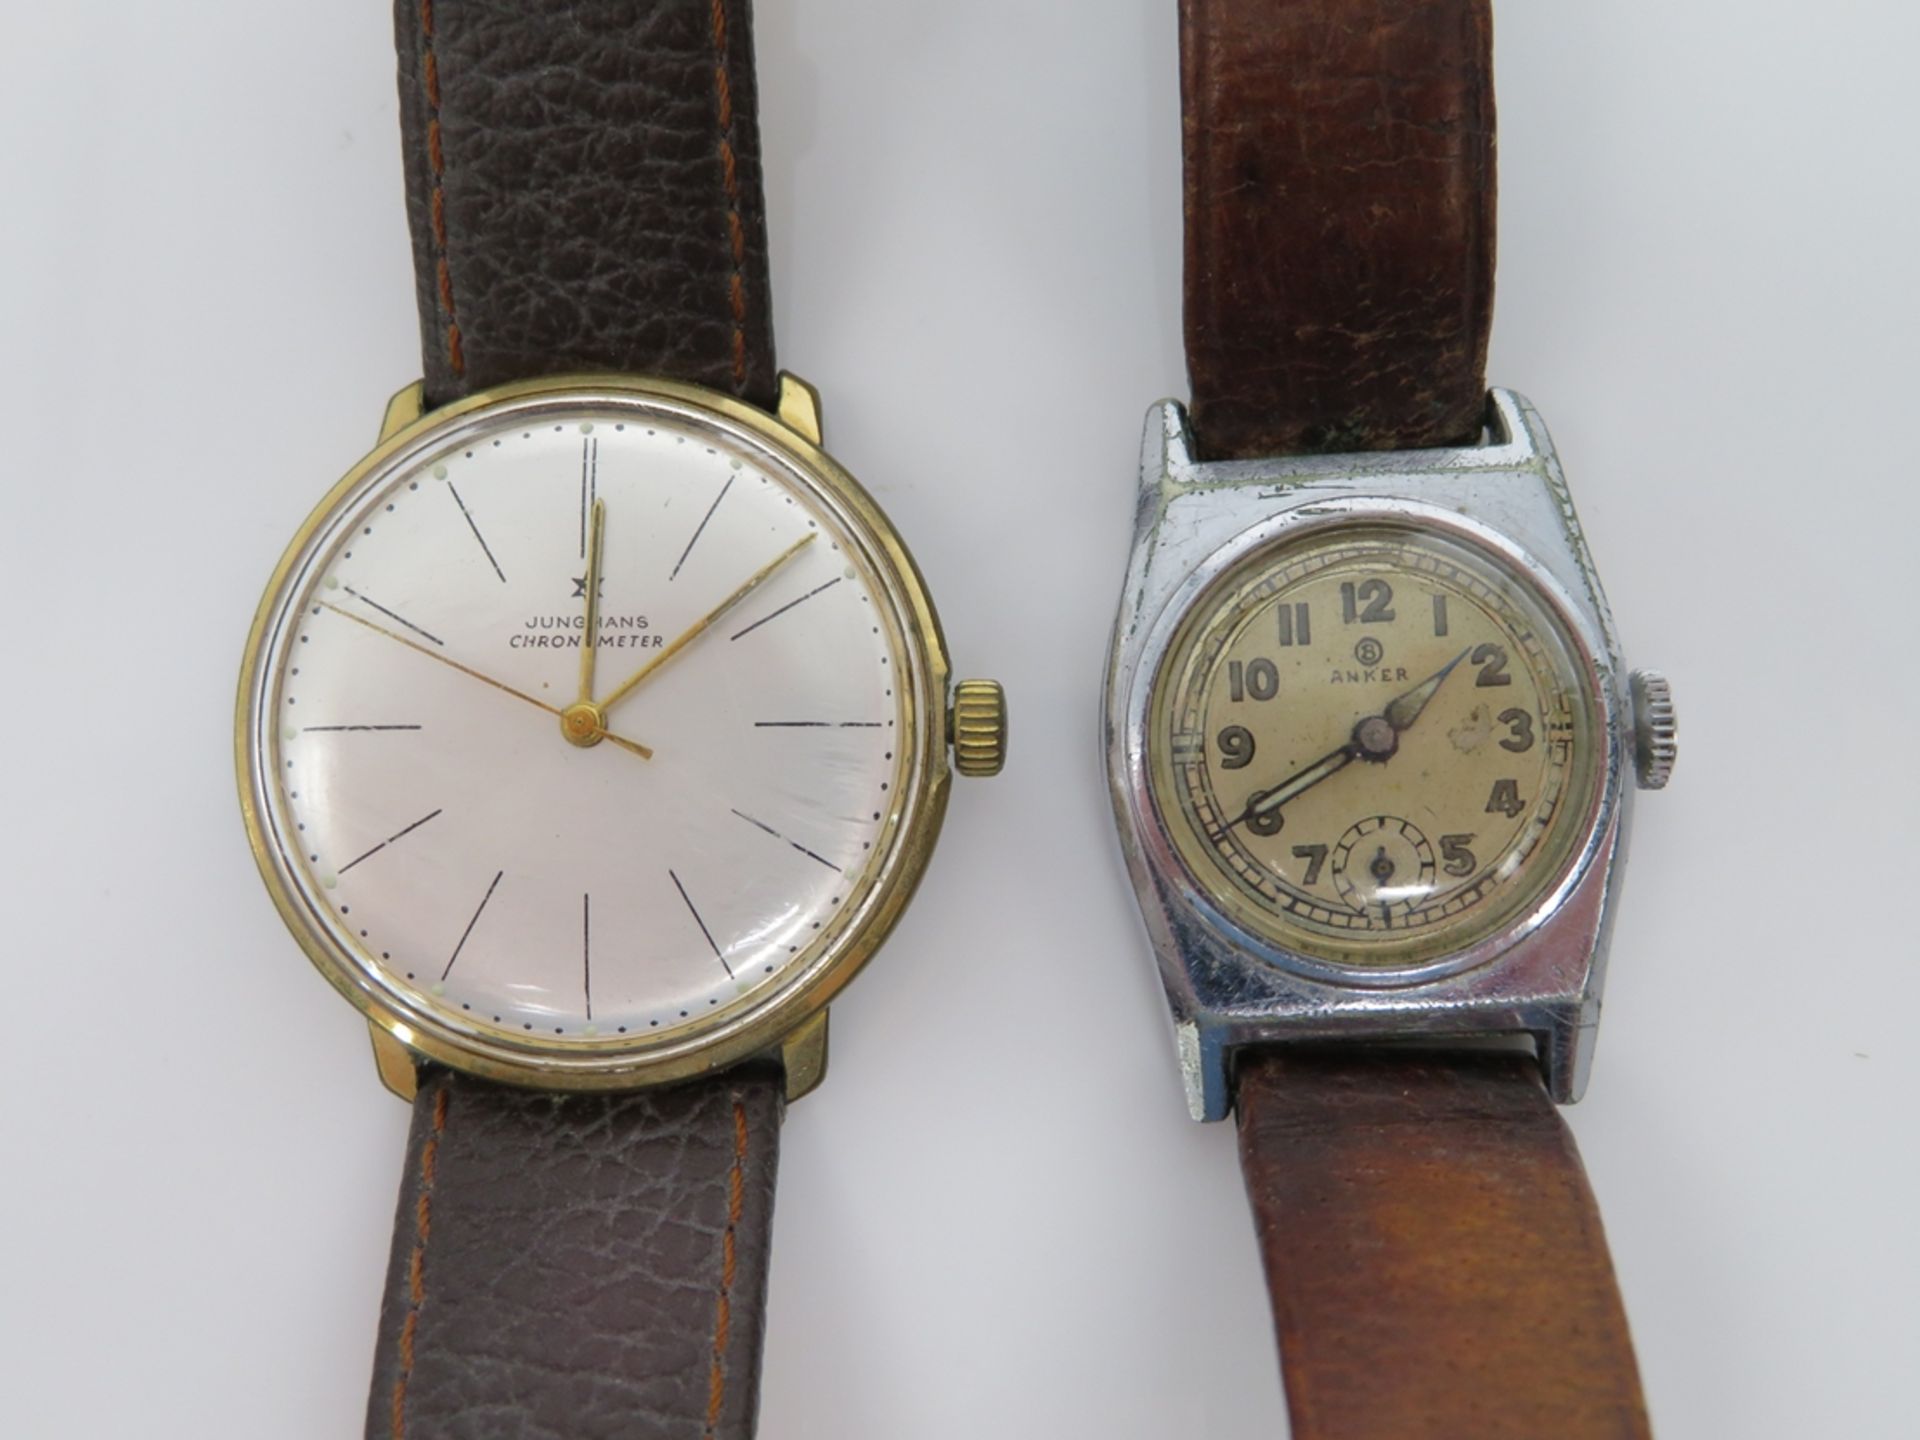 2 Vintage-Armbanduhren, Junghans Chronometer/Anker, vergoldete Gehäuse, Lederband, Gebrauchsspuren,